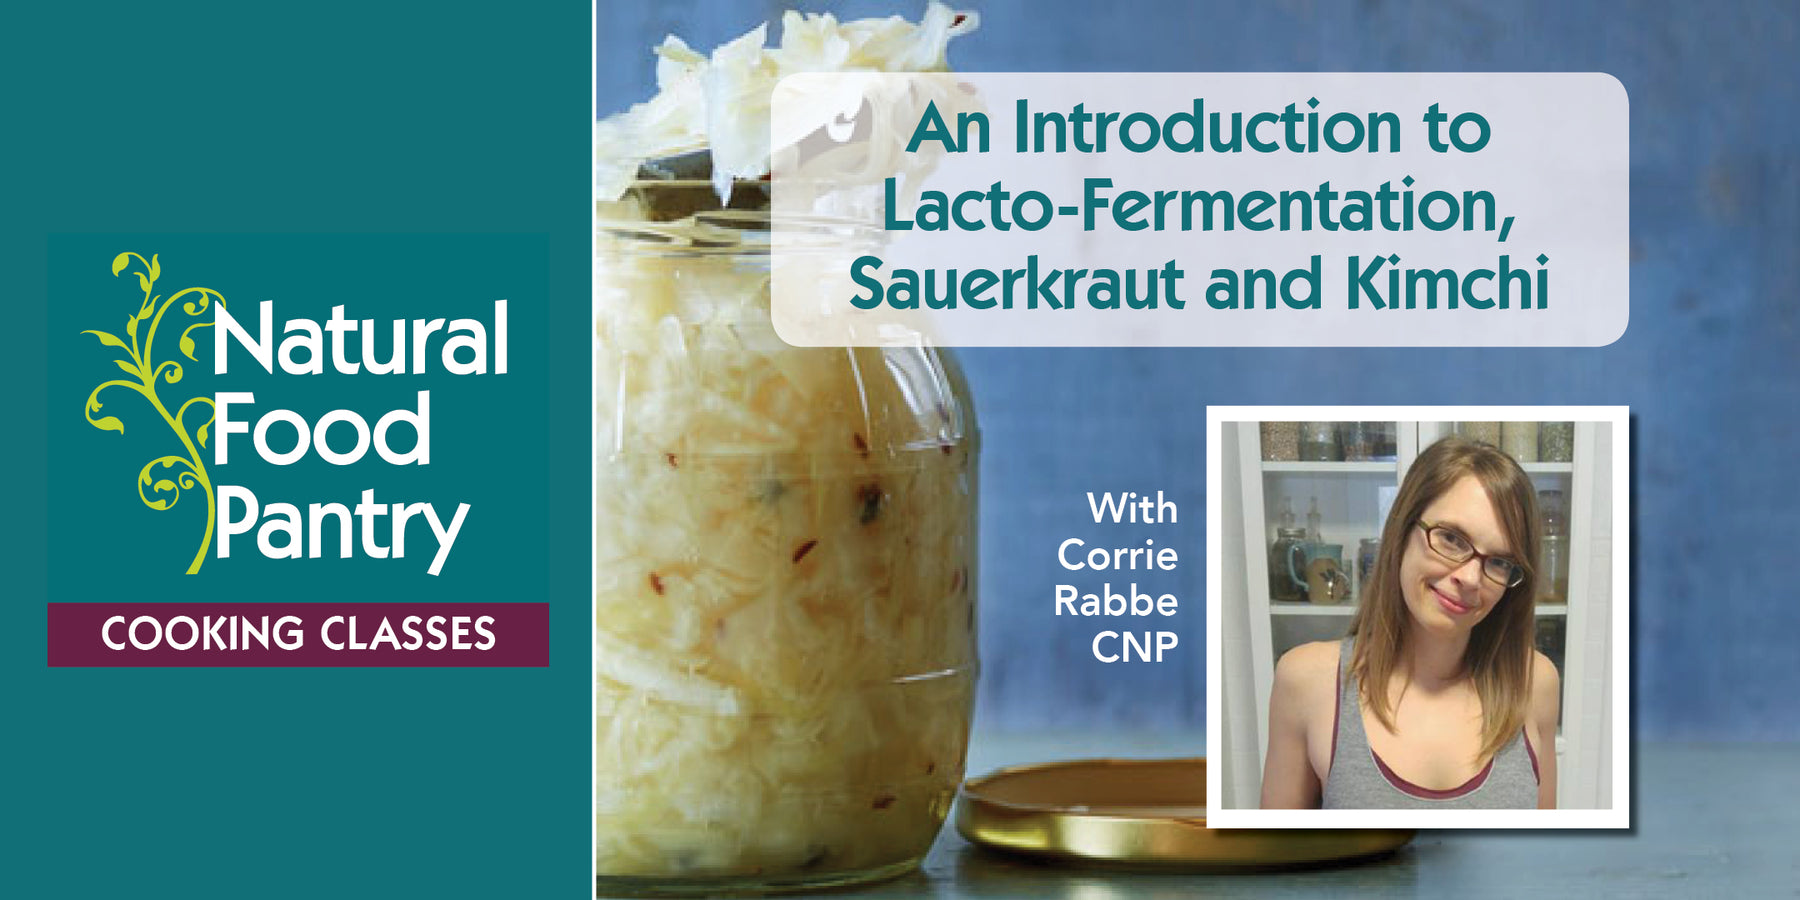 Apr 6: An Introduction to Lacto-Fermentation - Sauerkraut and Kimchi